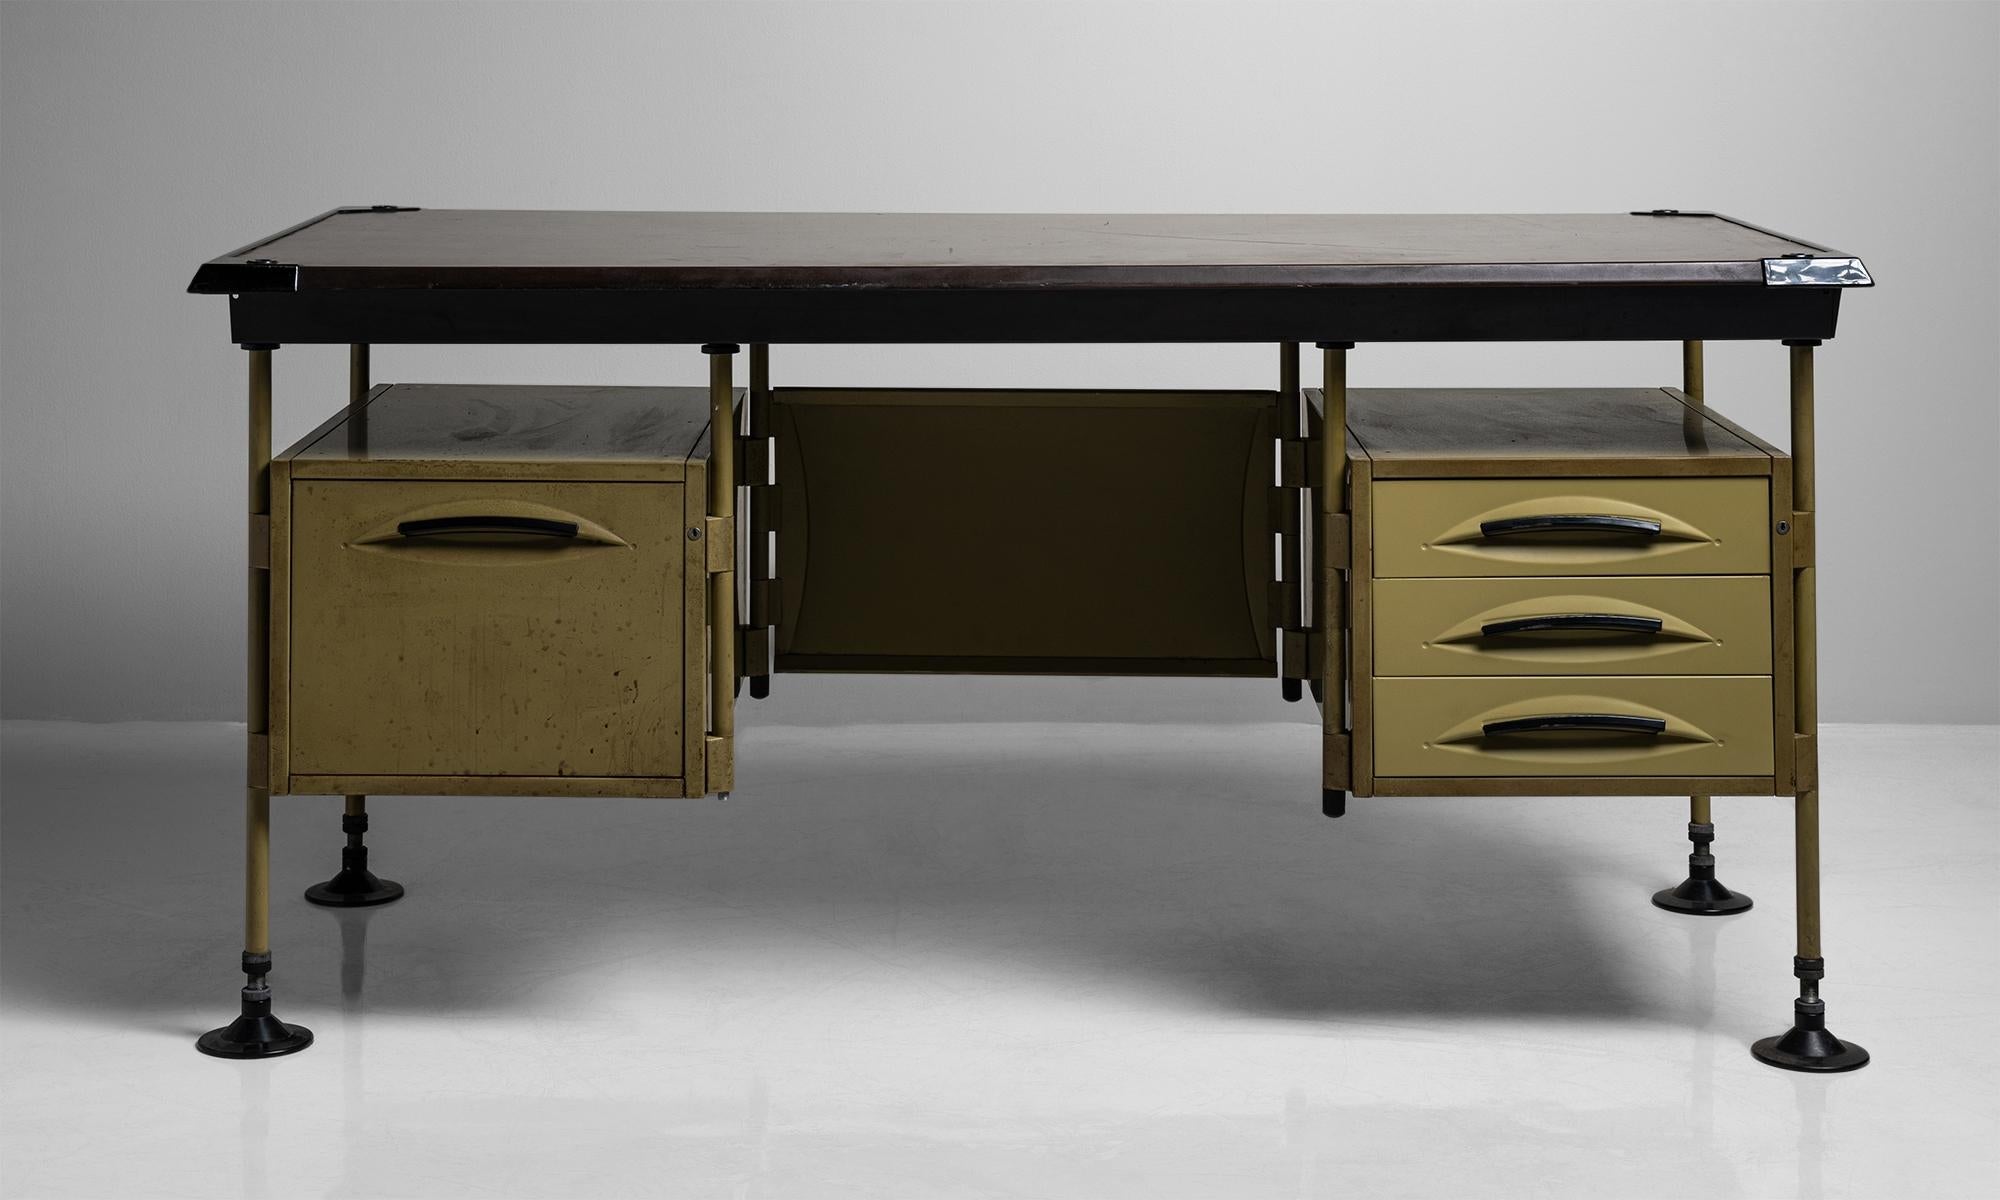 Laminated Spazio Modernista Desk by Studio BBPR, Italy, 1959